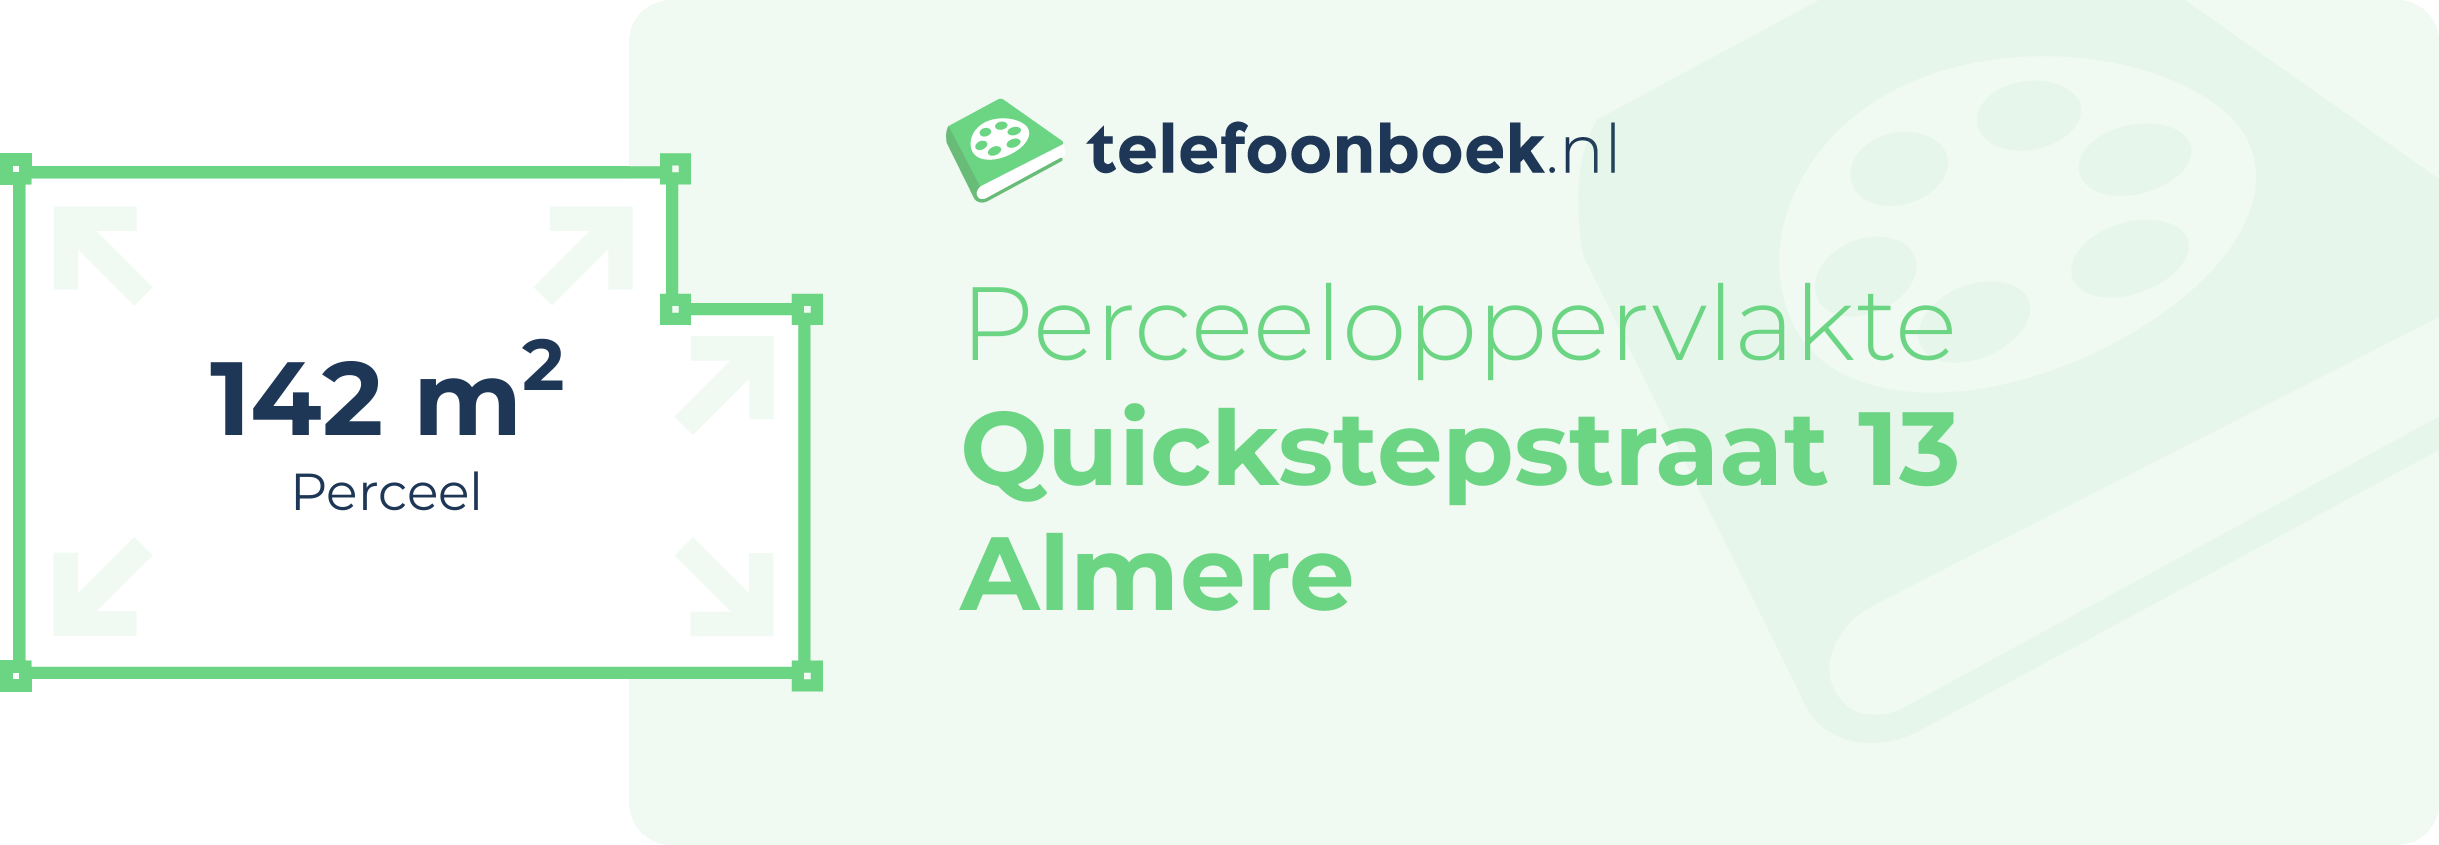 Perceeloppervlakte Quickstepstraat 13 Almere